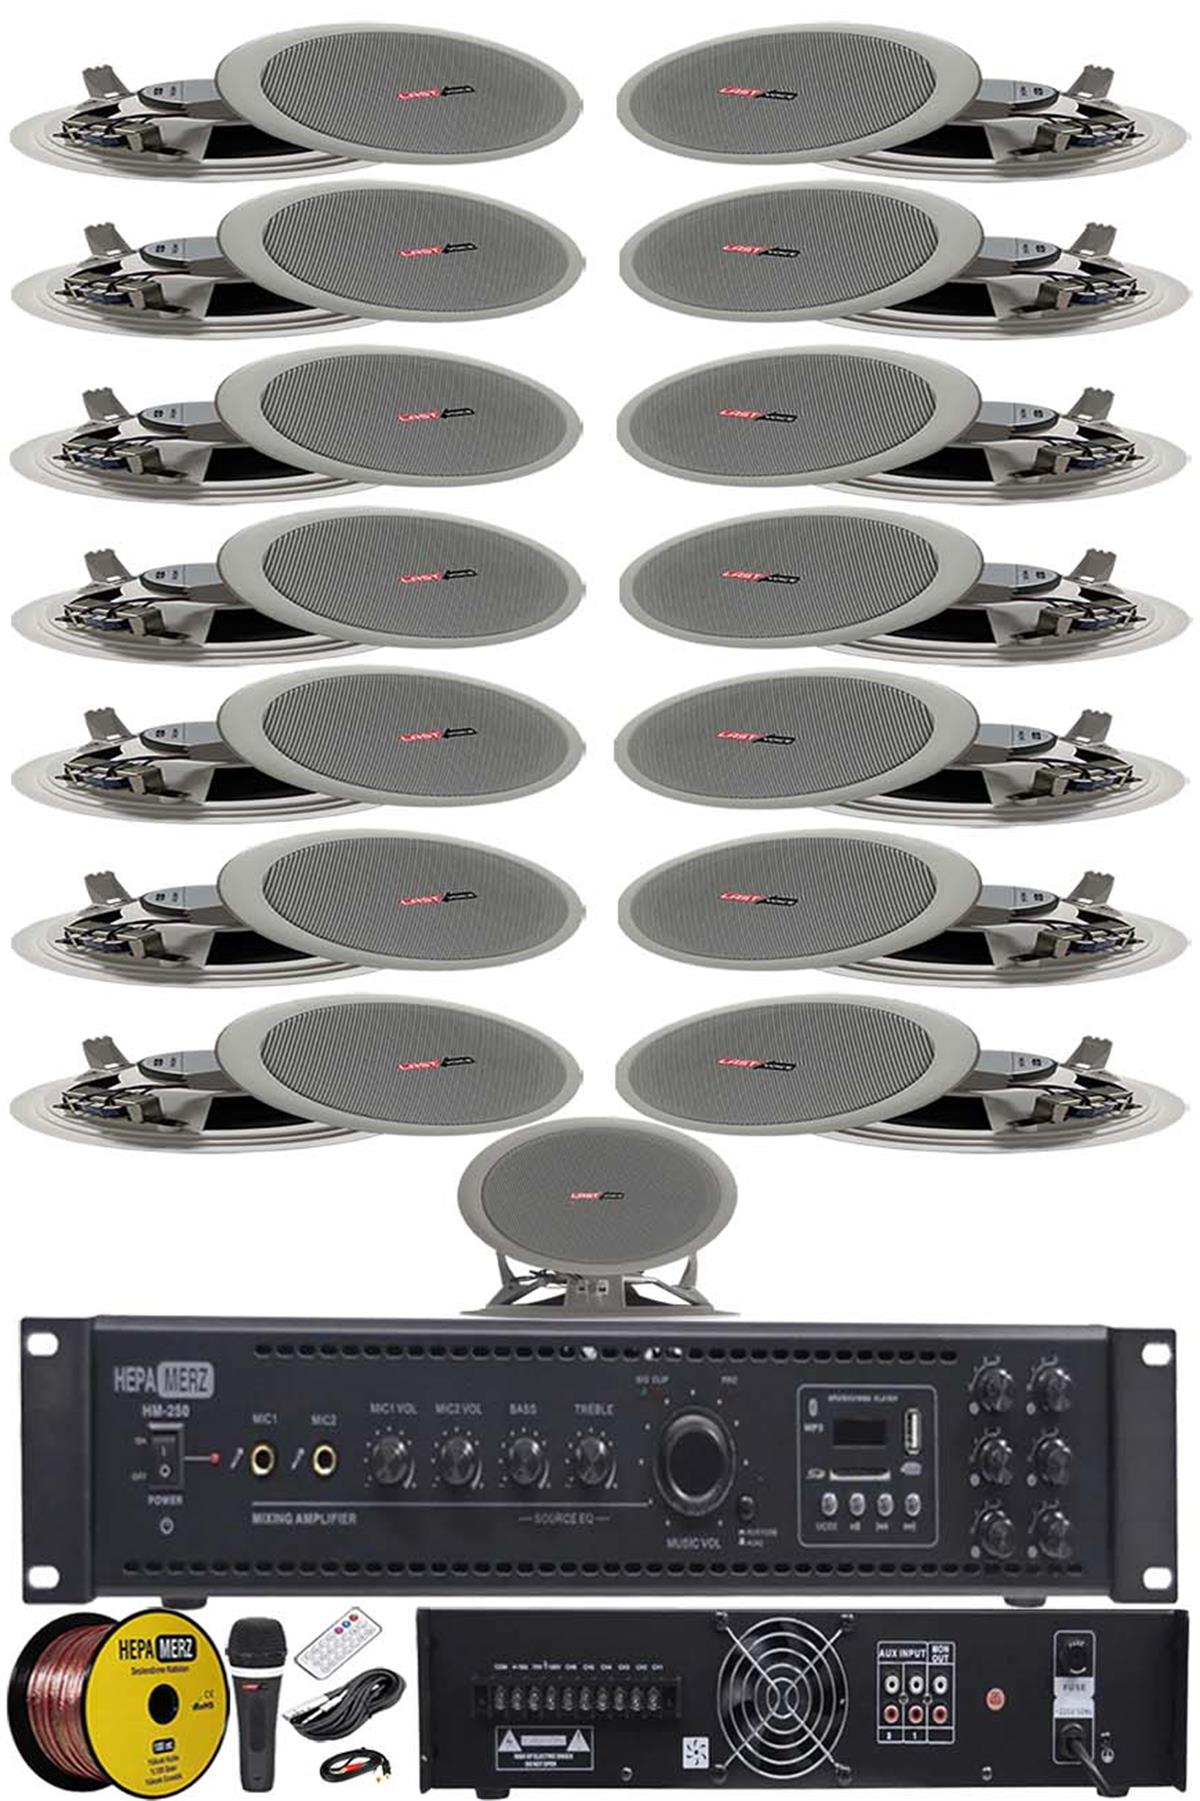 Lastvoice Maxx Paket-7 Tavan Hoparlörü ve 6 Bölgeli Anfi Ses Sistemi Paketi  (Full Set)